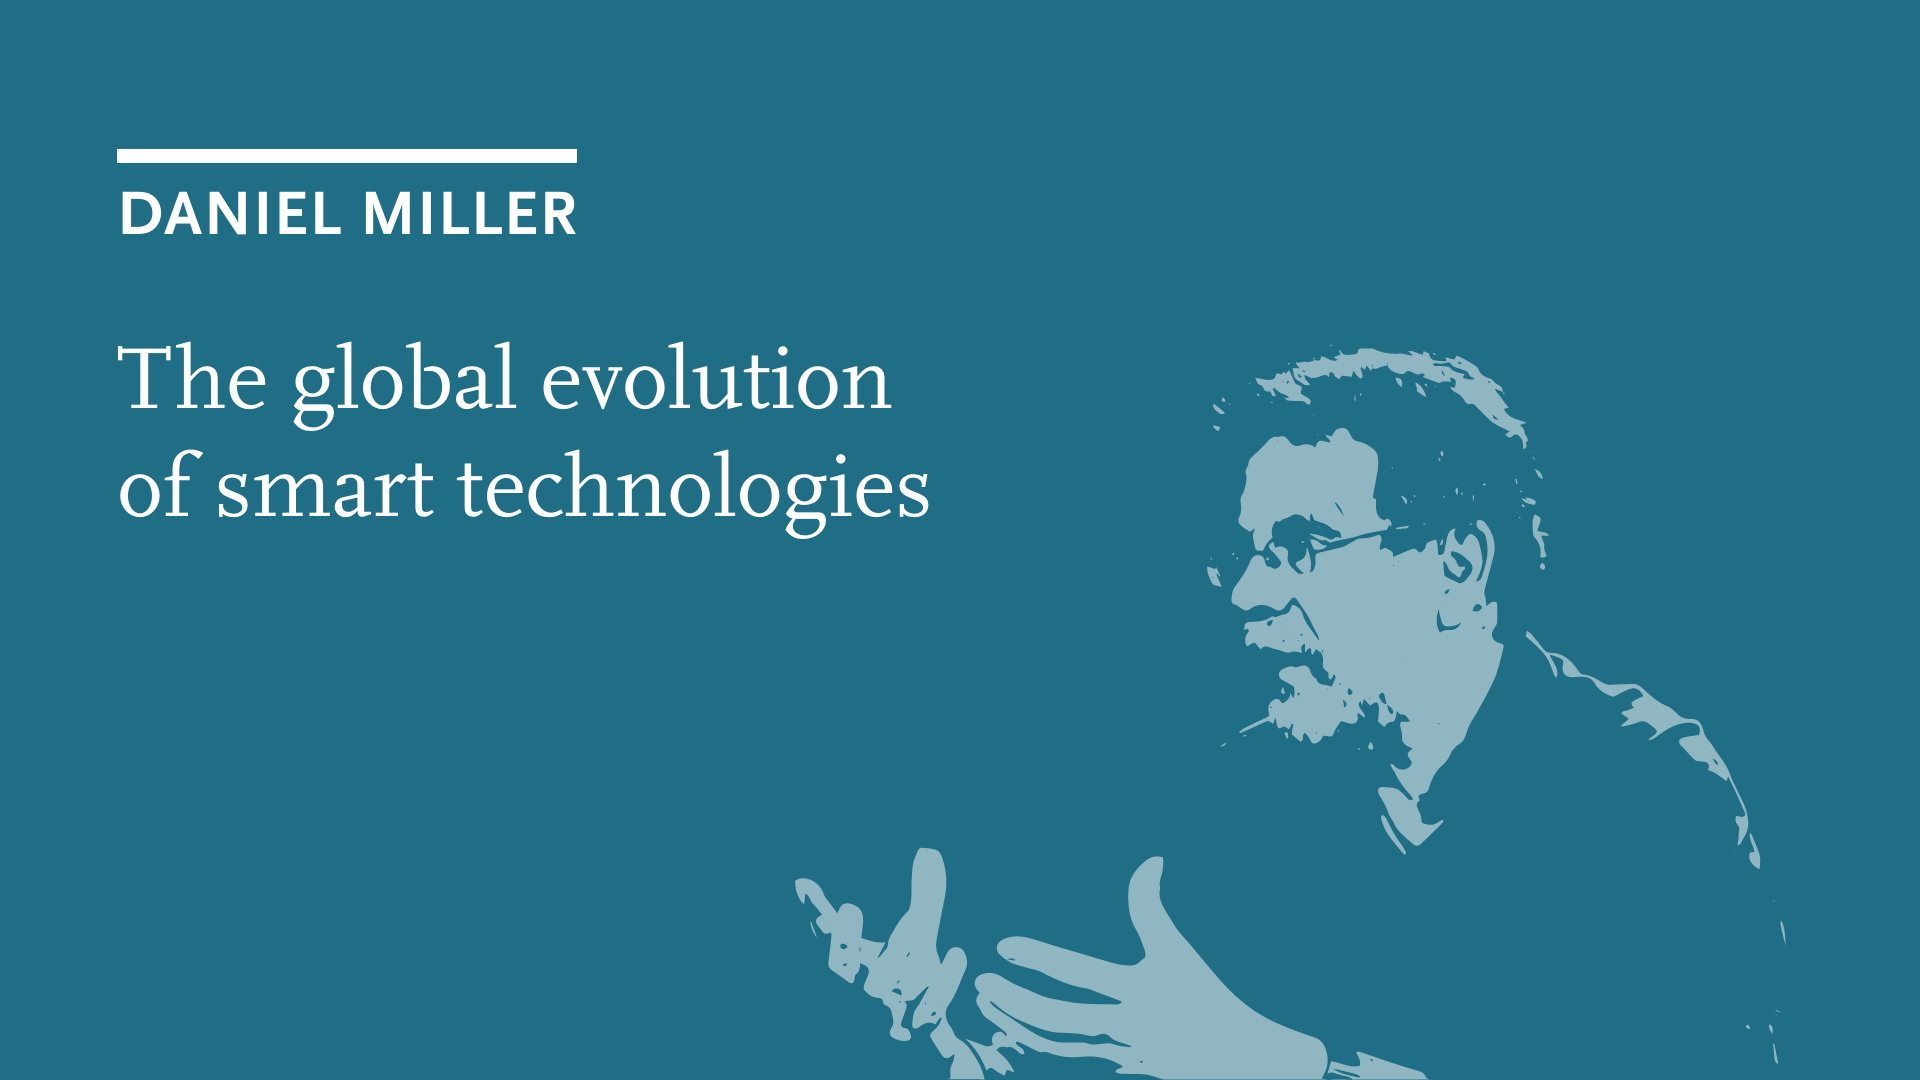 Daniel Miller: The global evolution of smart technologies